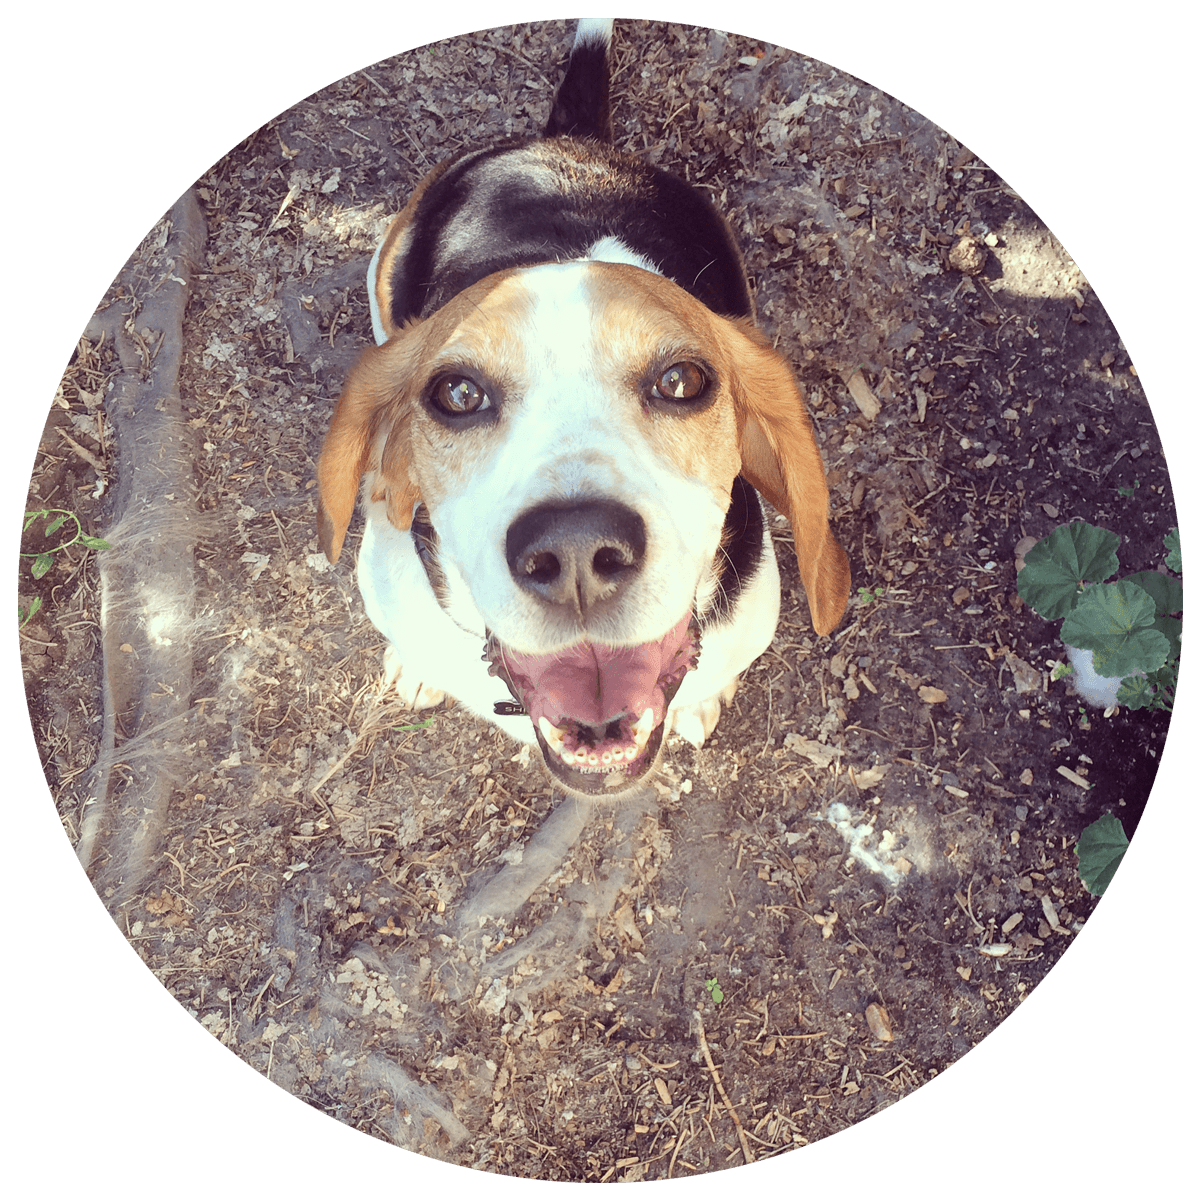 Shiloh – The Beagle/Basset a.k.a. Bagel